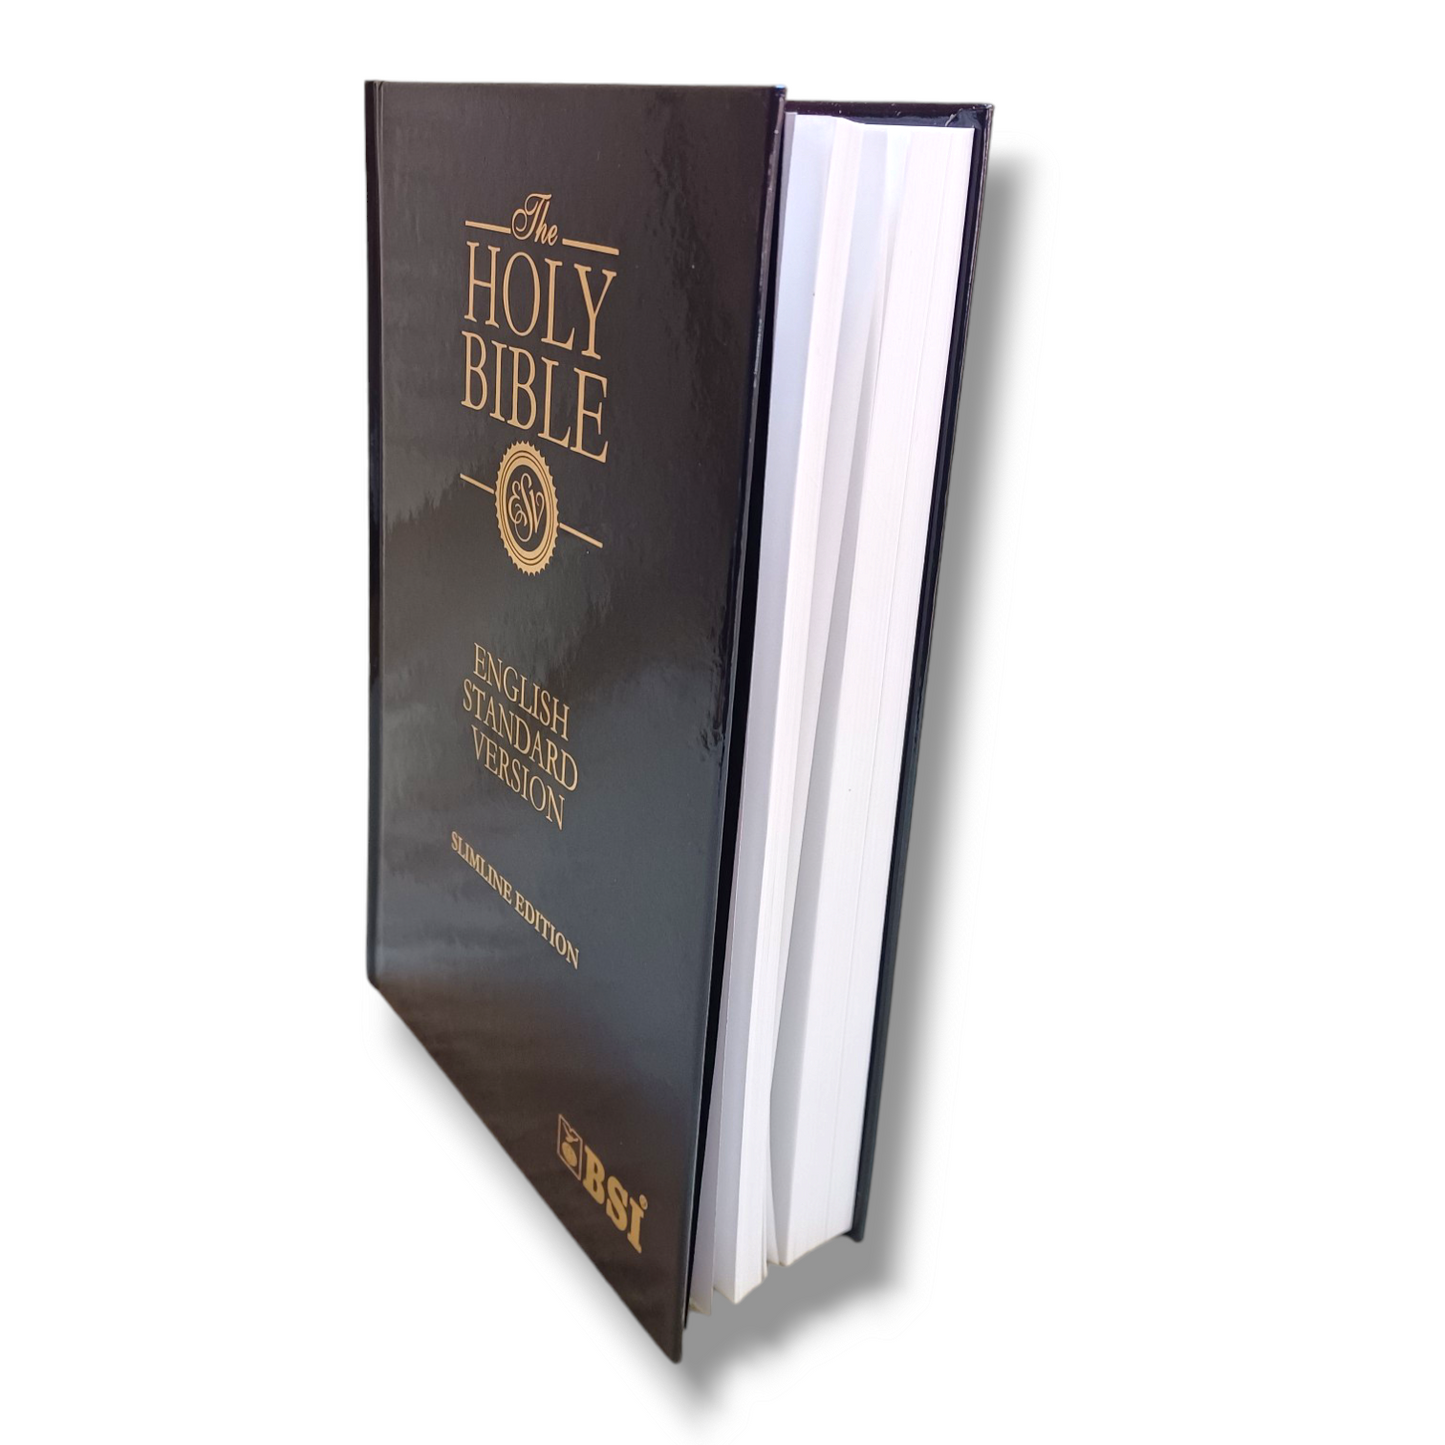 ESV BIBLE | ENGLISH STANDARD VERSION | SLIMLINE EDITION EDITION | HARD BOUND EDITION | MEDIUM SIZE | NEW EDITION|